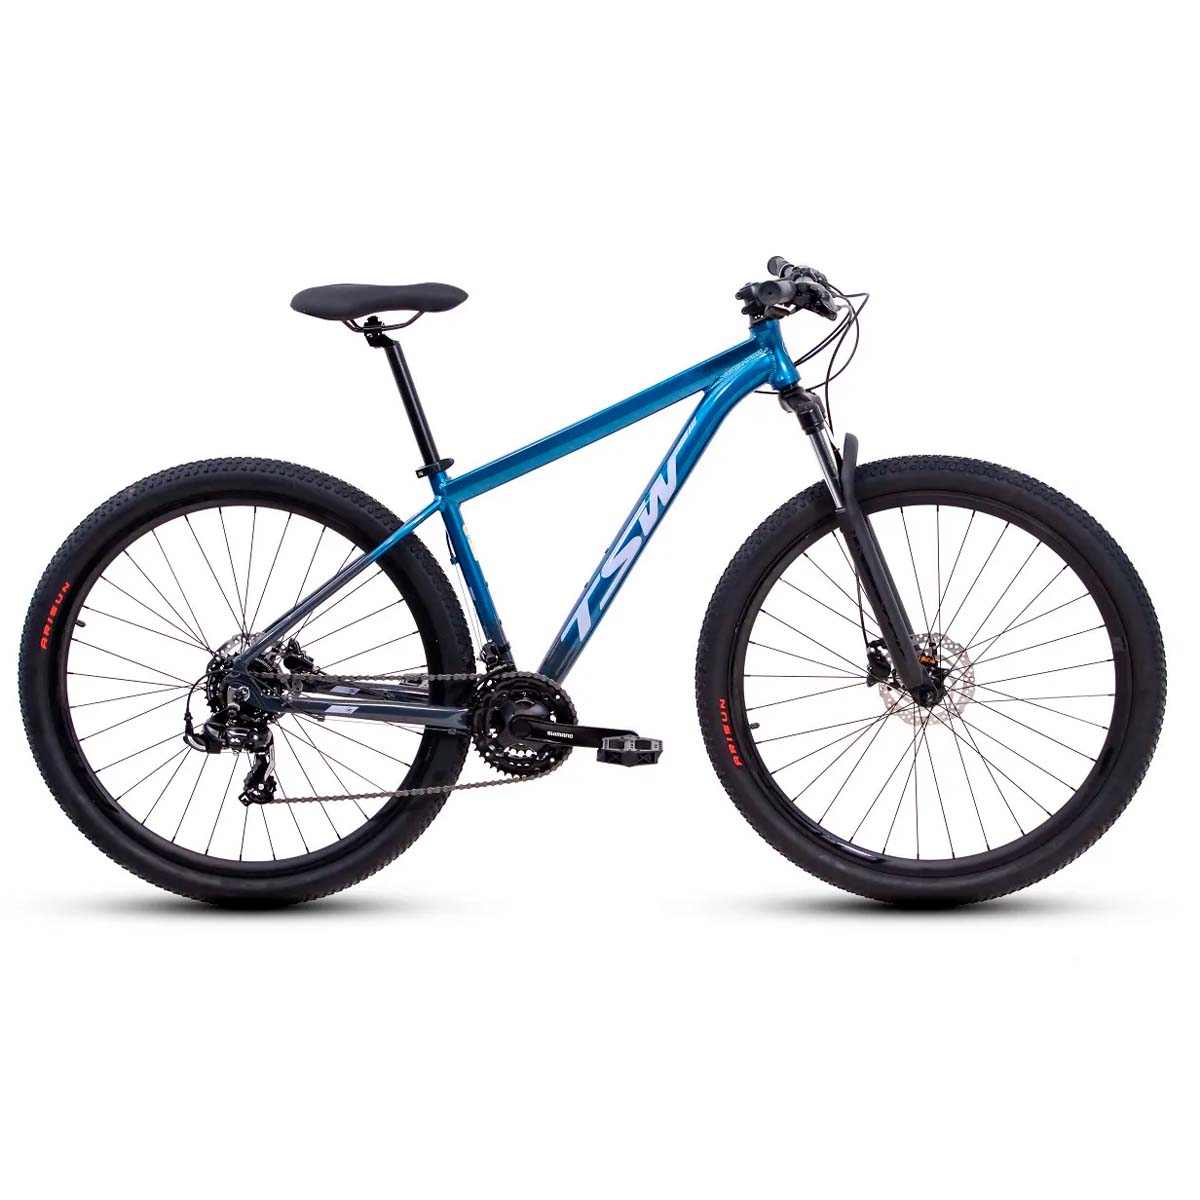 Bicicleta TSW Ride Plus Aro 29 Shimano 21V Freio Hidraulico Azul e Cinza